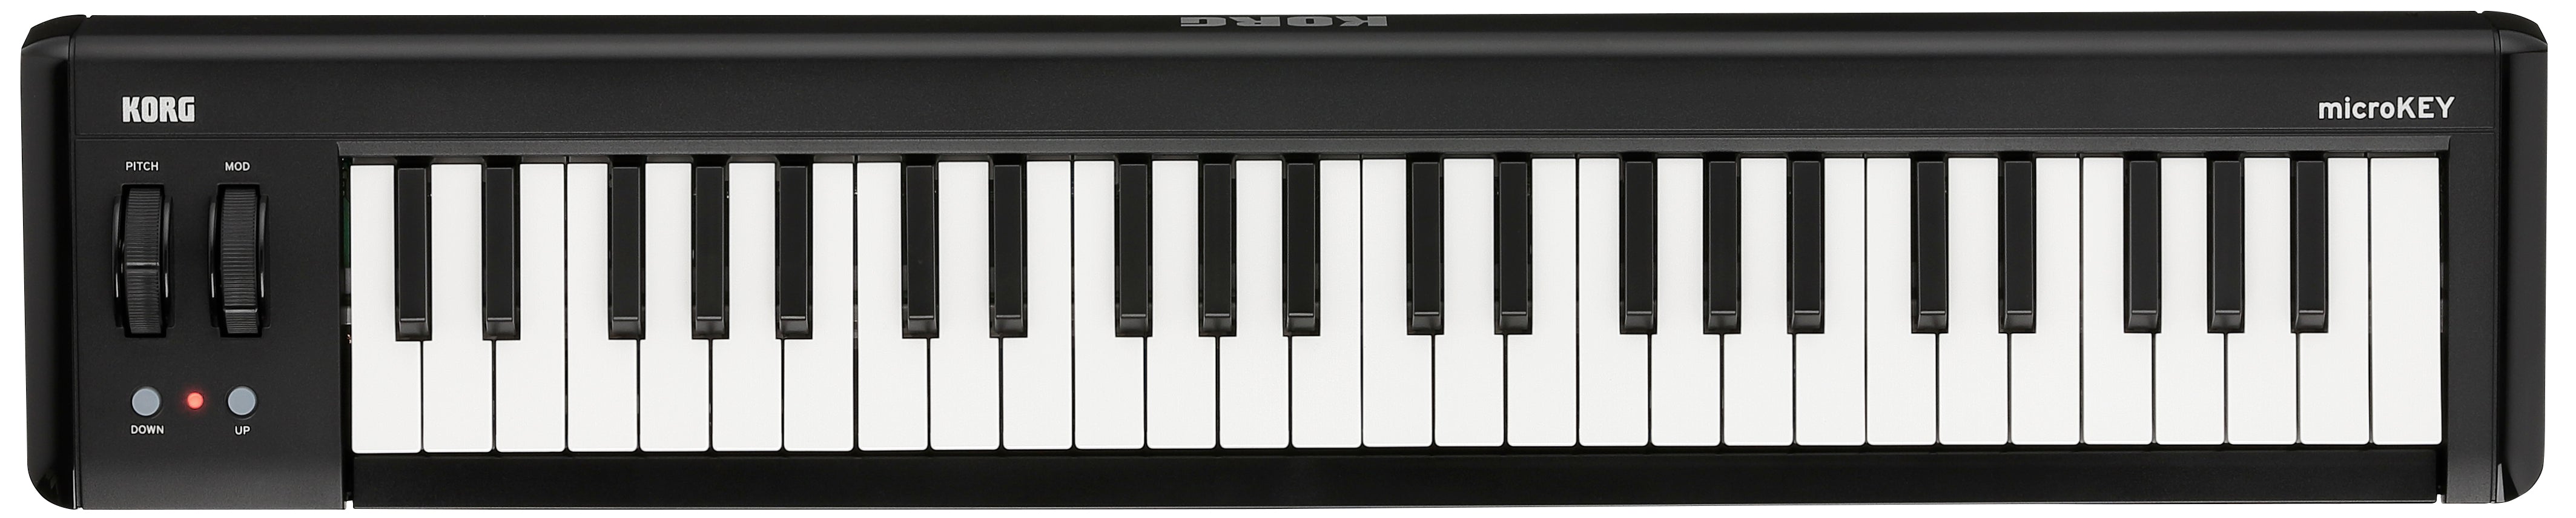 microKEY-49 Key - Keyboard Controller